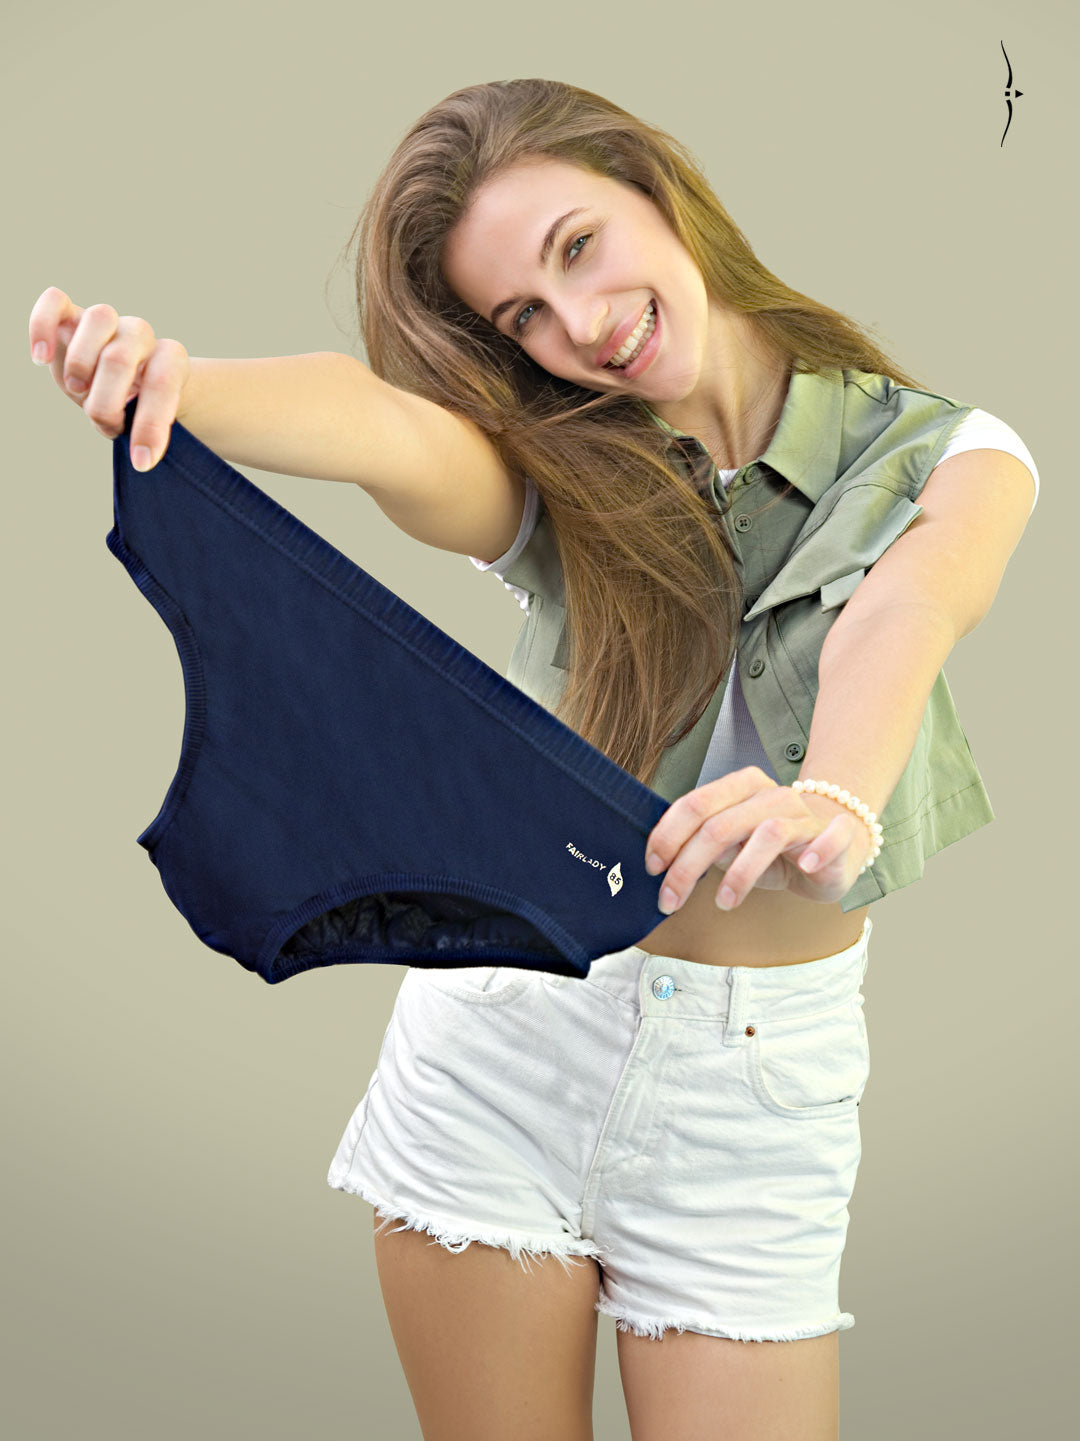 Essa Fairlady Pista Ladies Underwear/Panties (Plain Light Color Pure Cotton)  - Assorted Color PACK OF 5 PC. (size chart available)